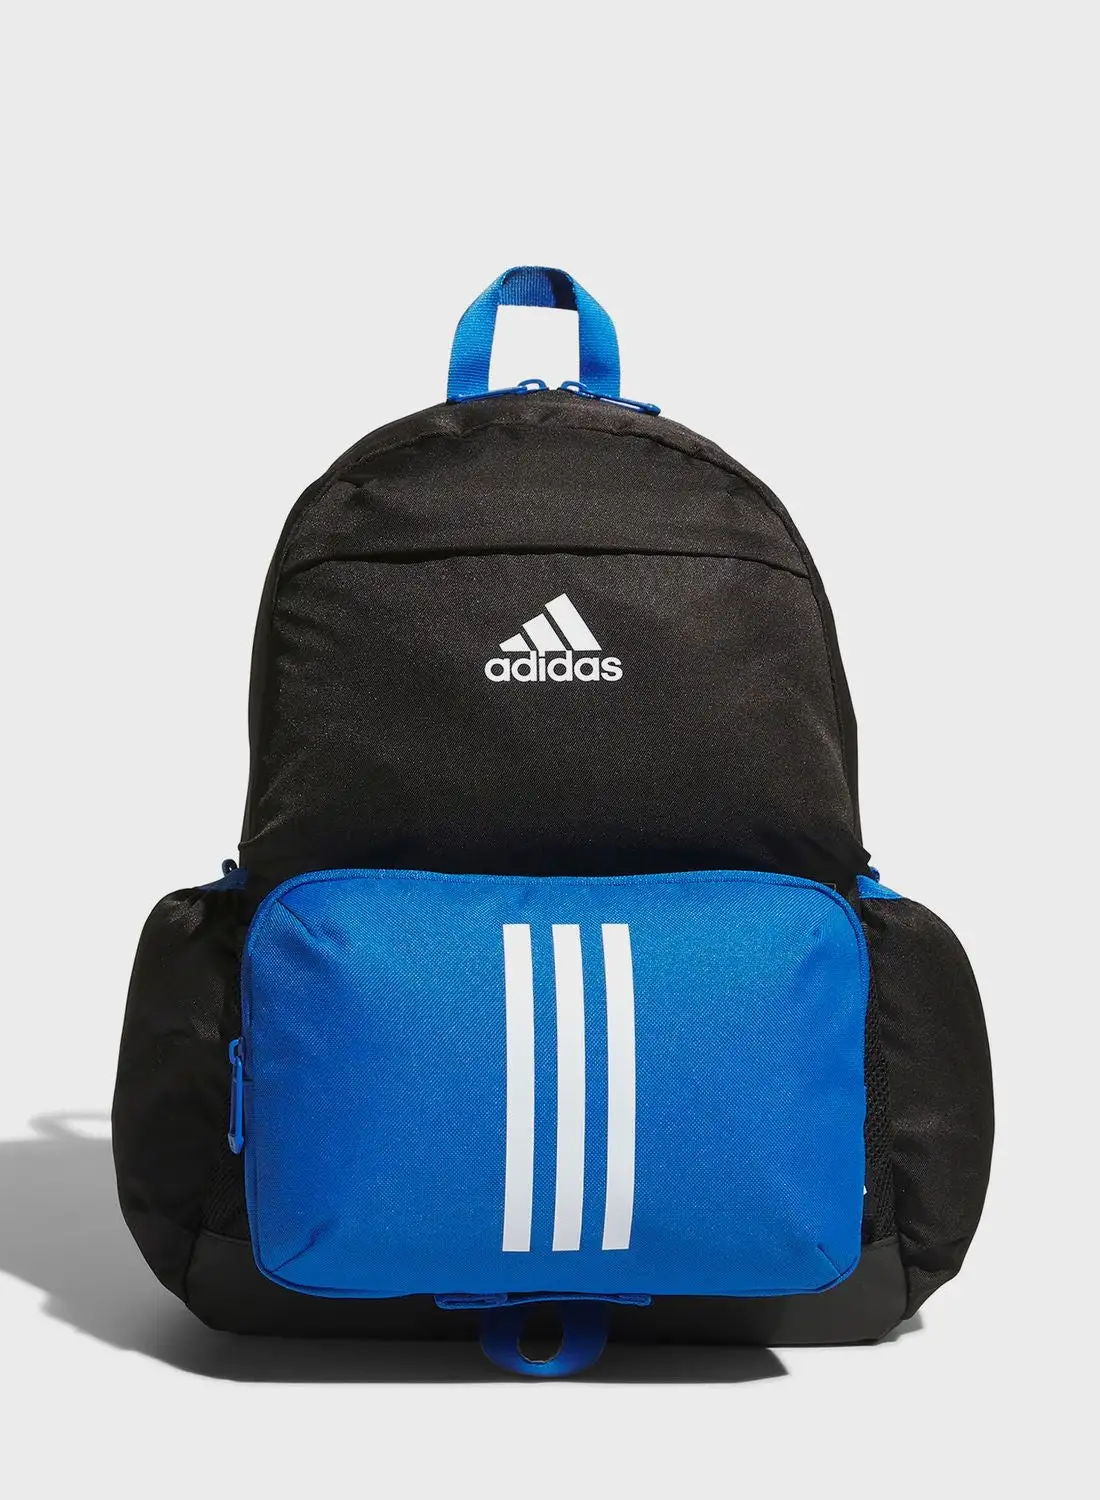 Adidas 2-In-1 Backpack Kids